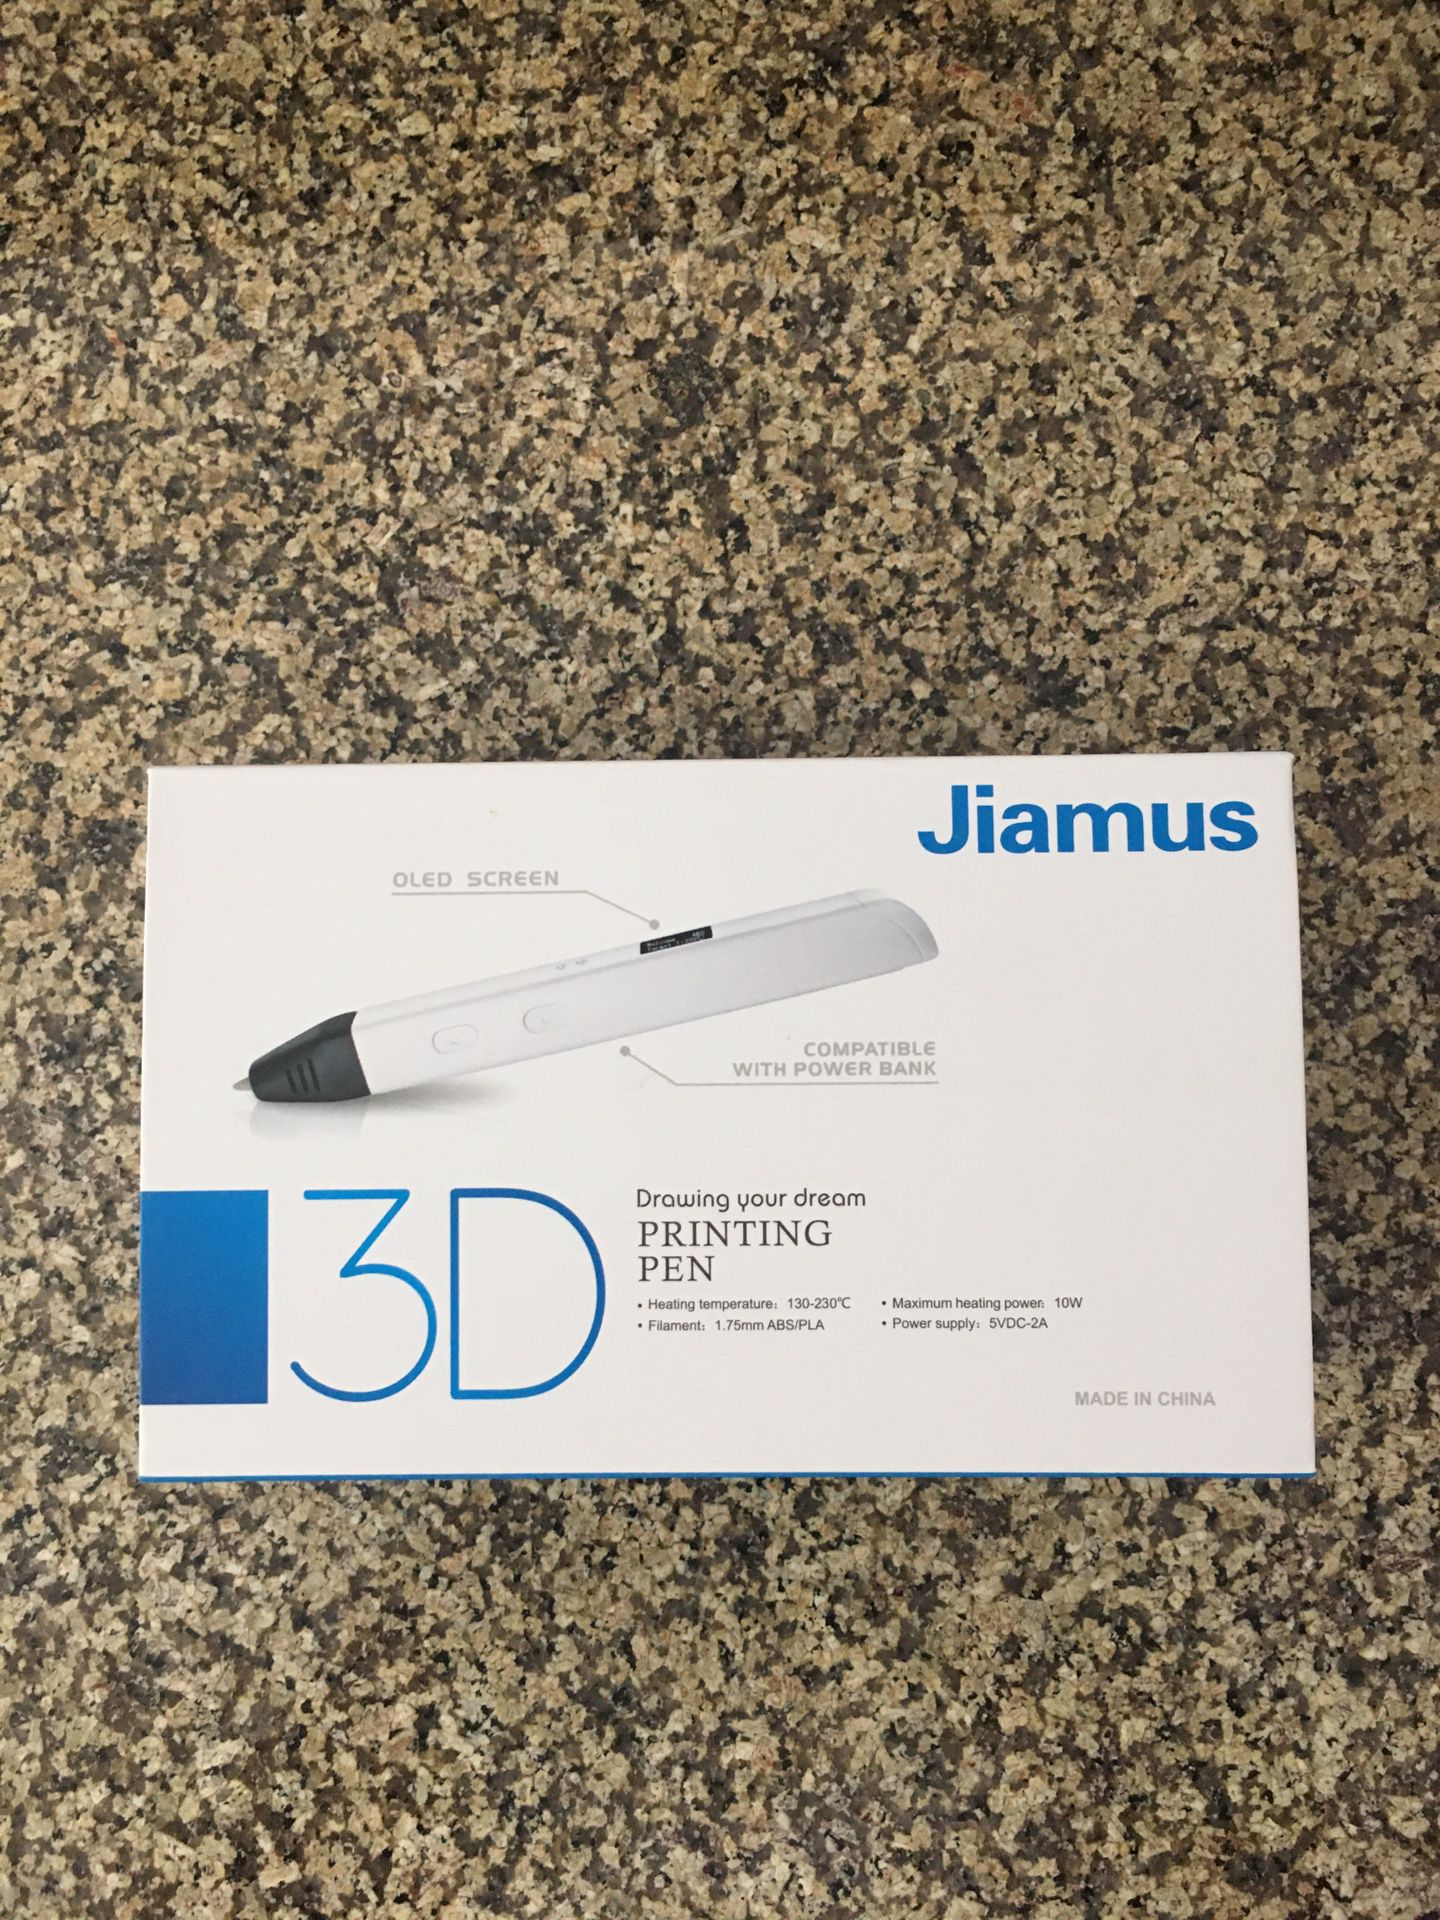 Jiamus 3D printing pen - Brand New